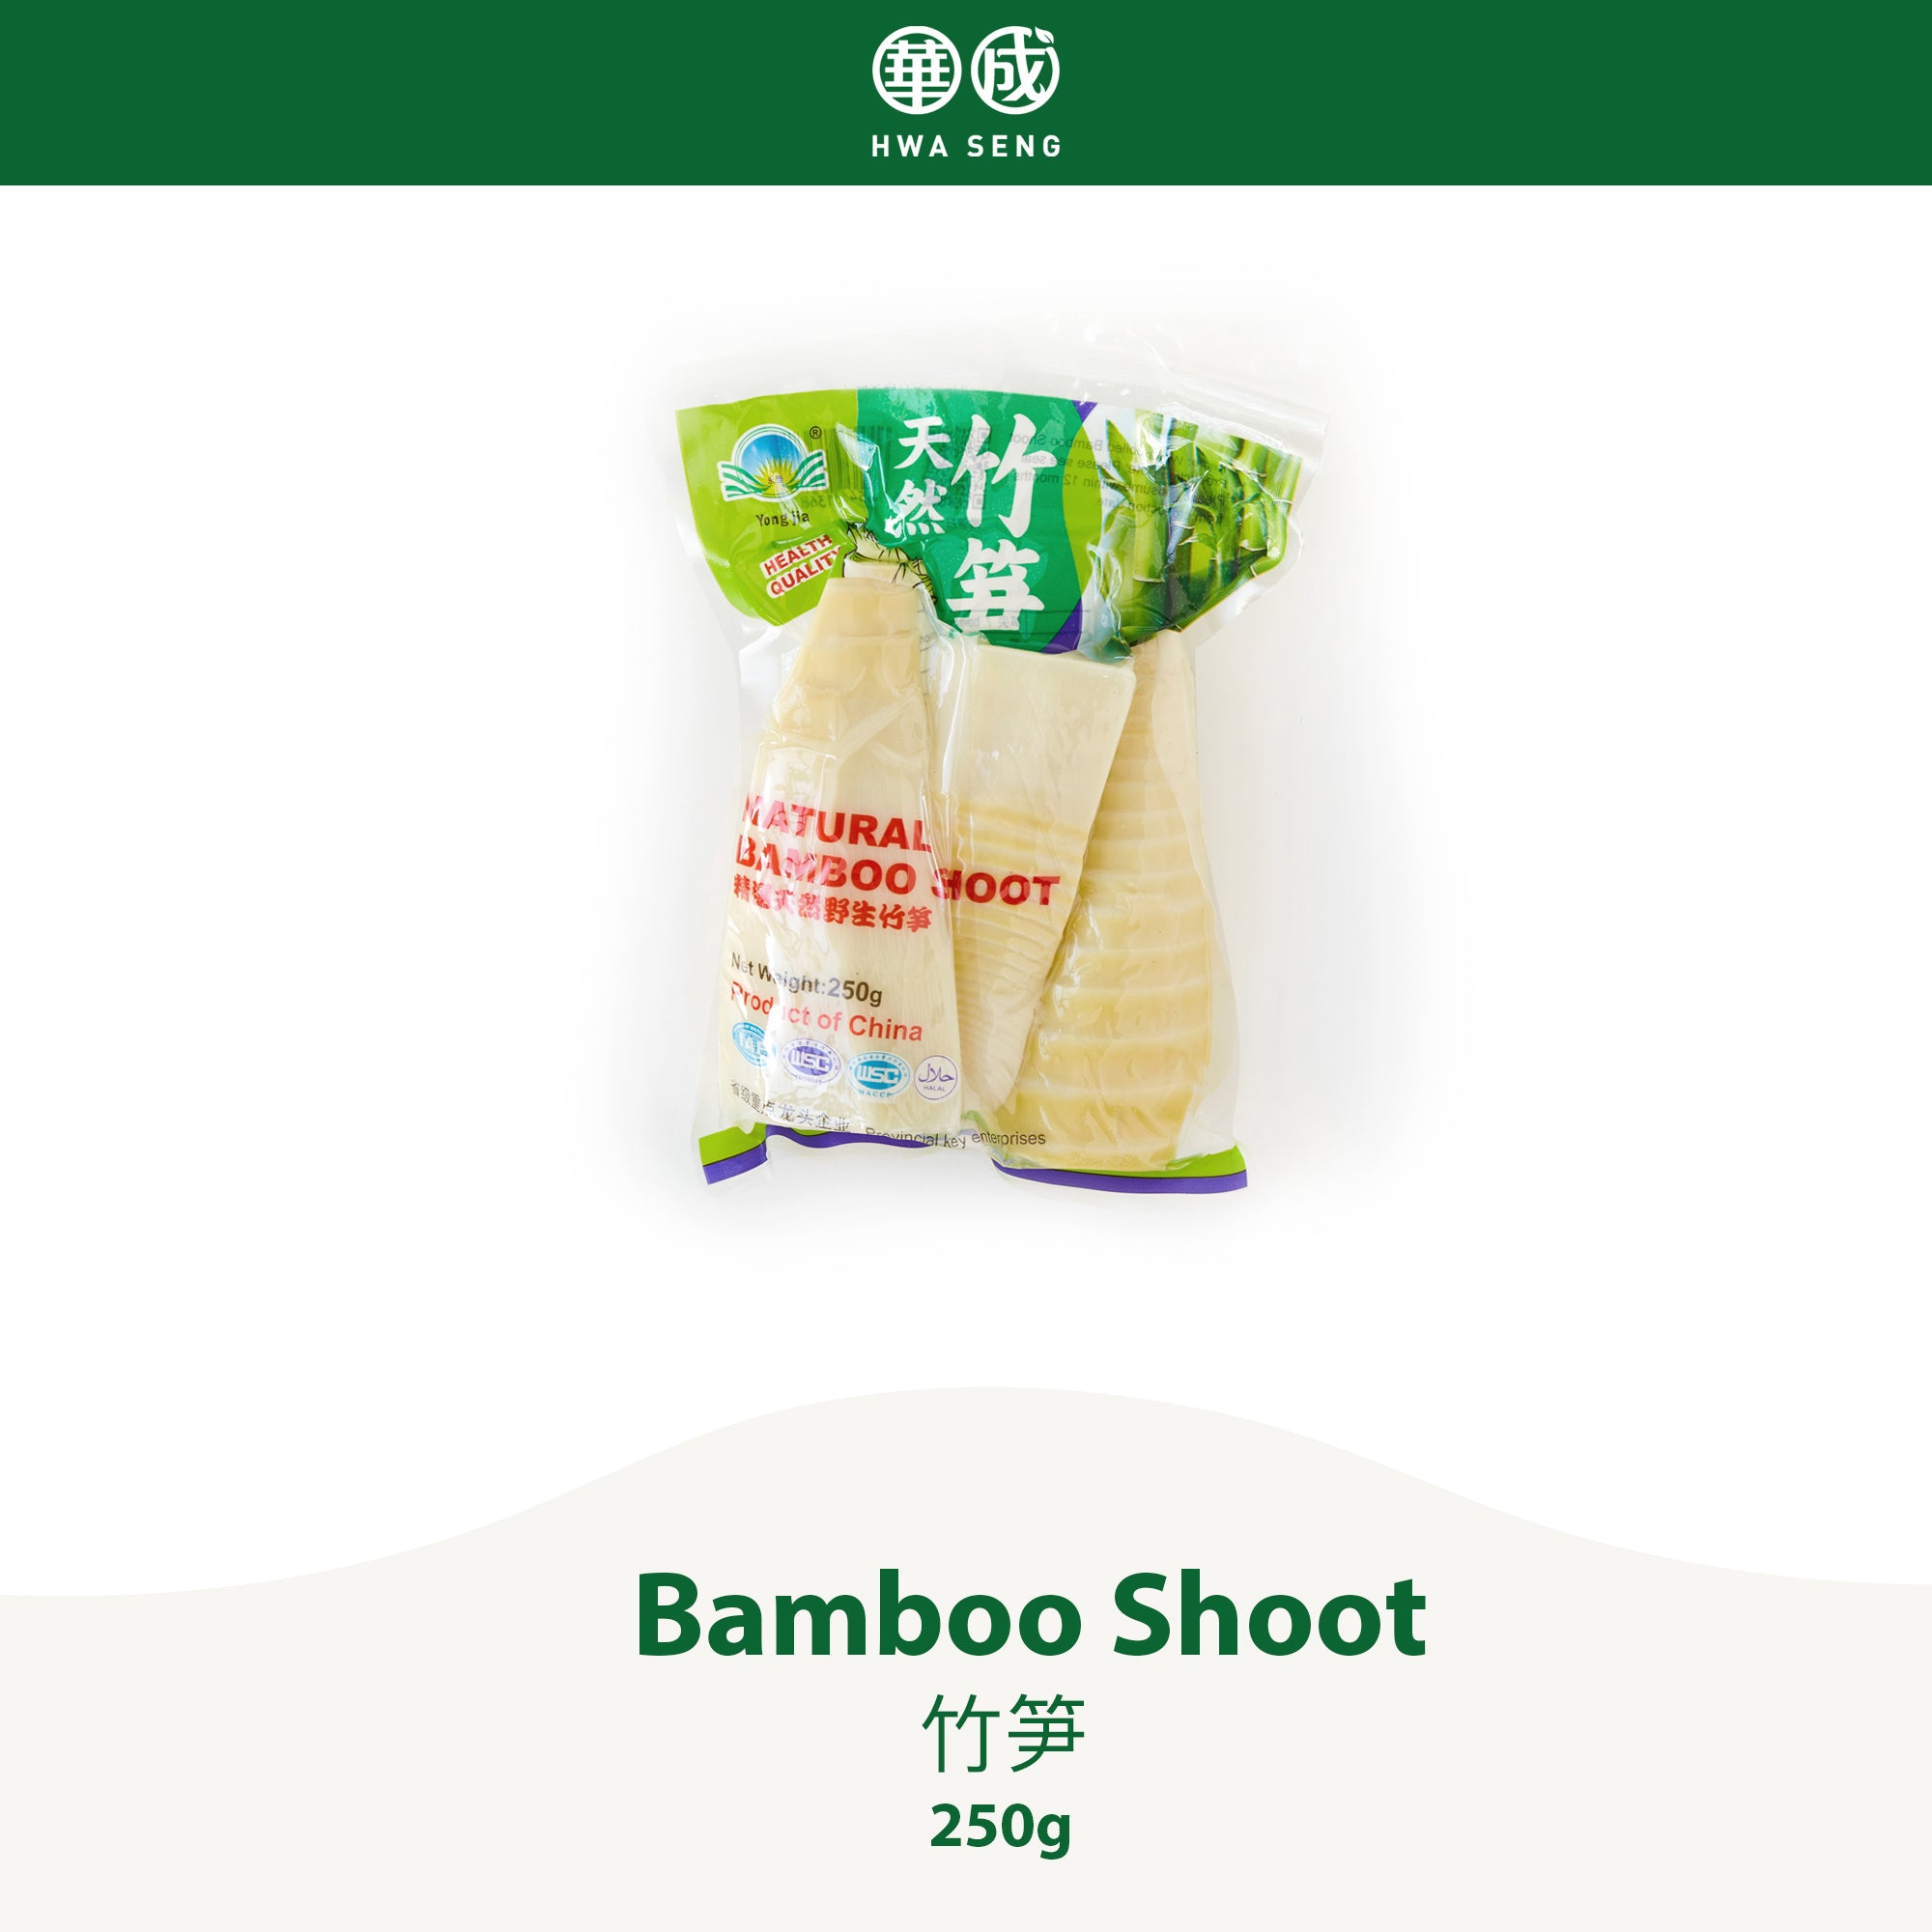 Bamboo Shoot 竹笋 250g per pkt